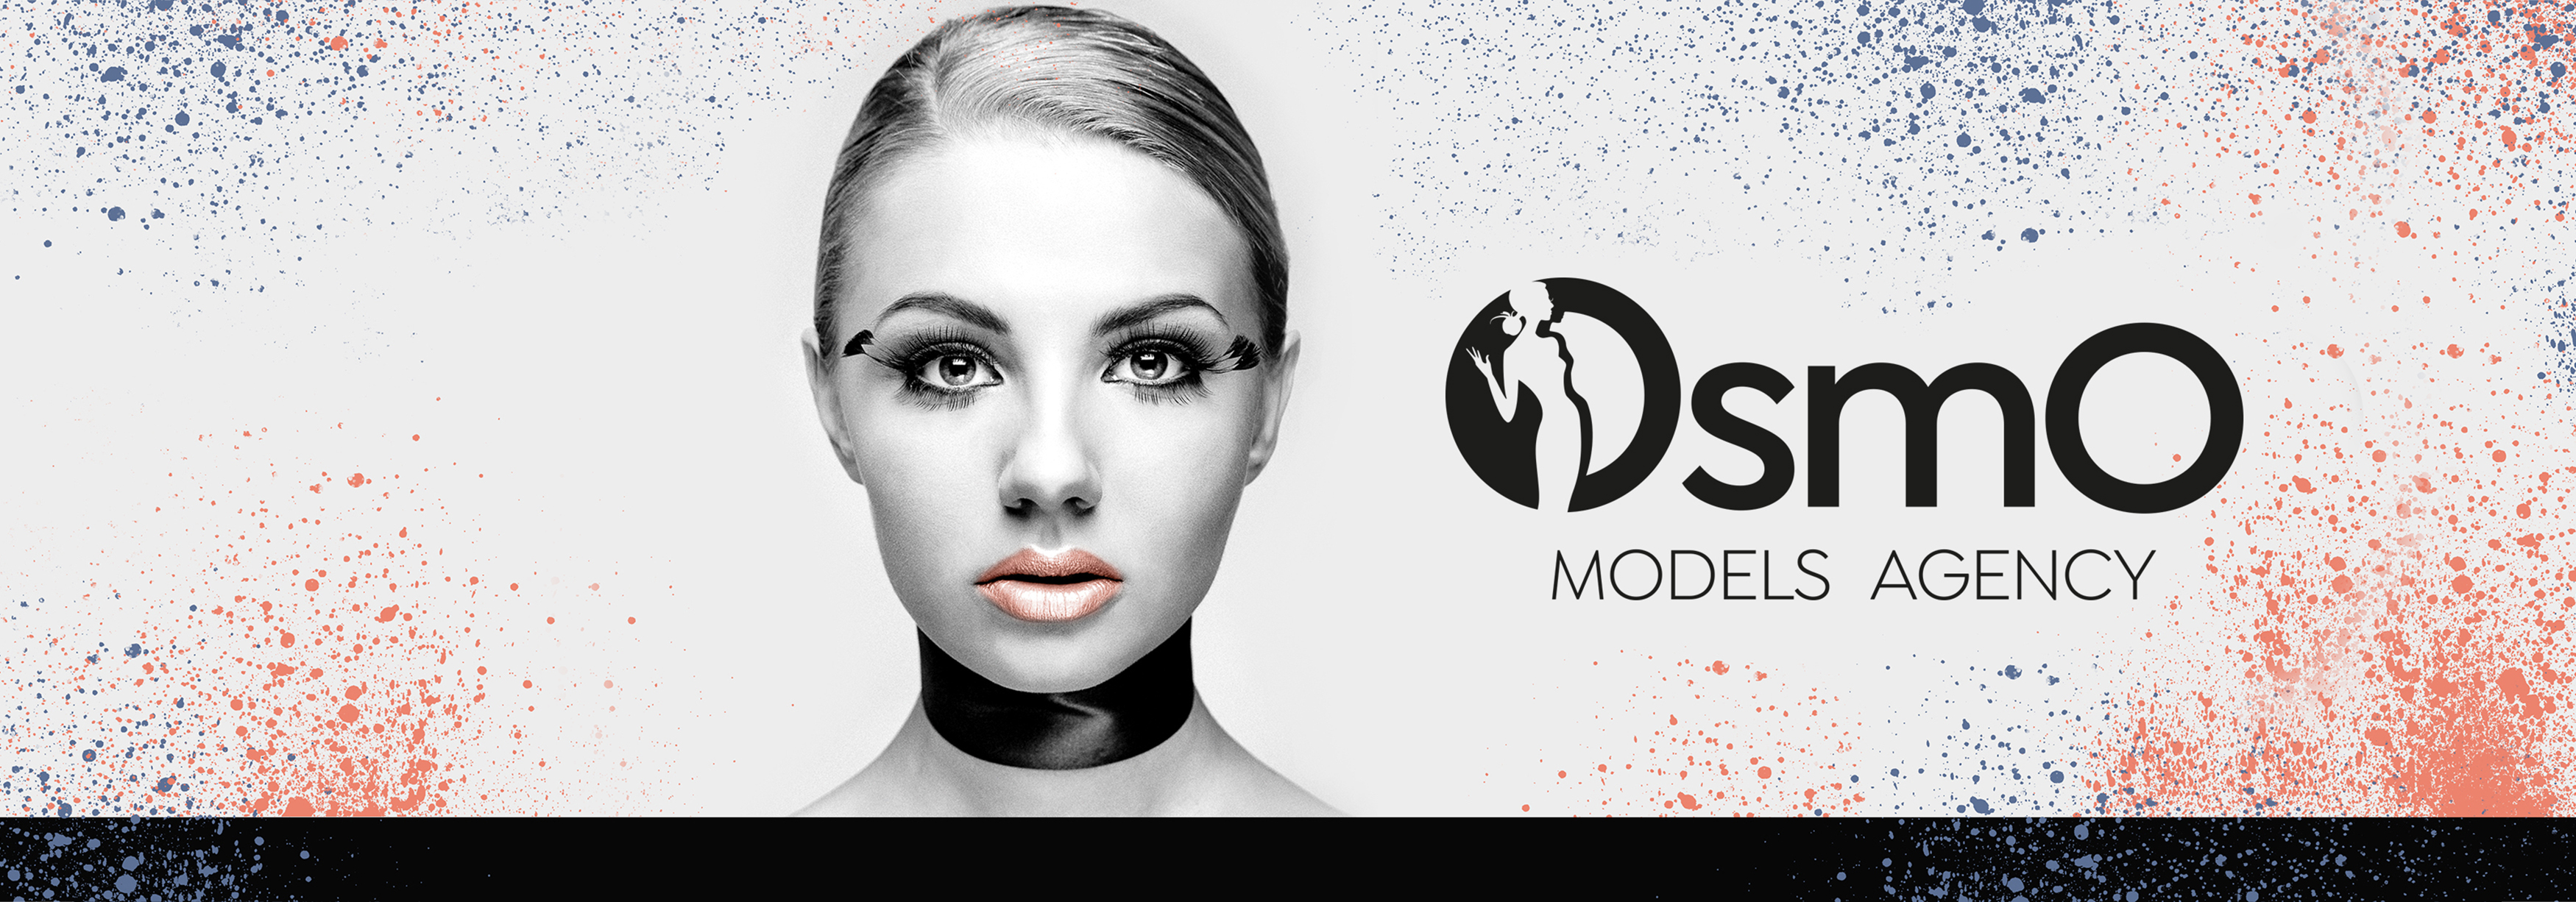 Osmo - models agency